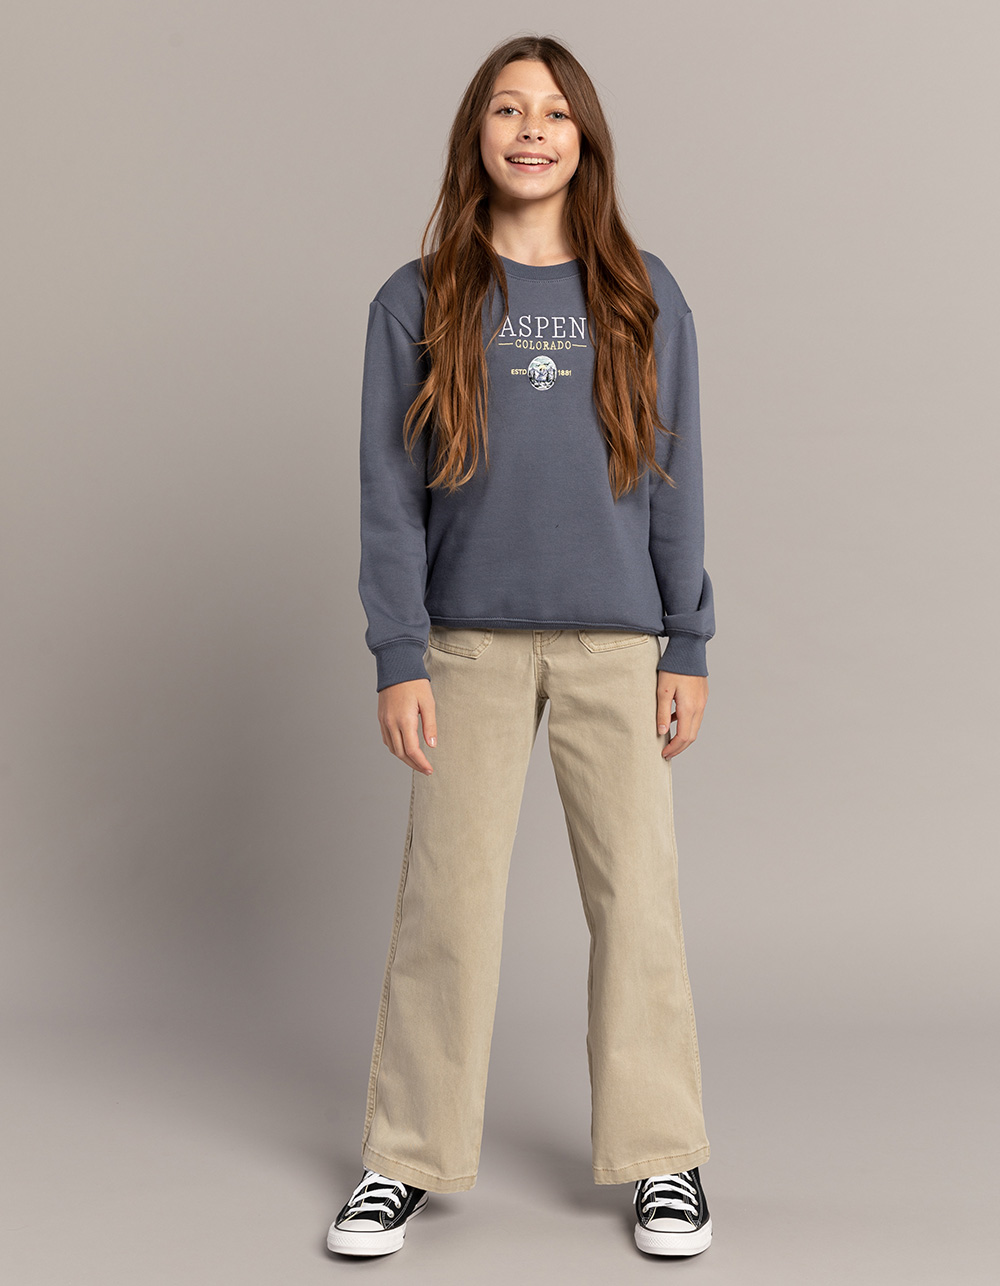 FULL TILT Aspen Girls Embroidered Crewneck Sweatshirt - DUSK | Tillys